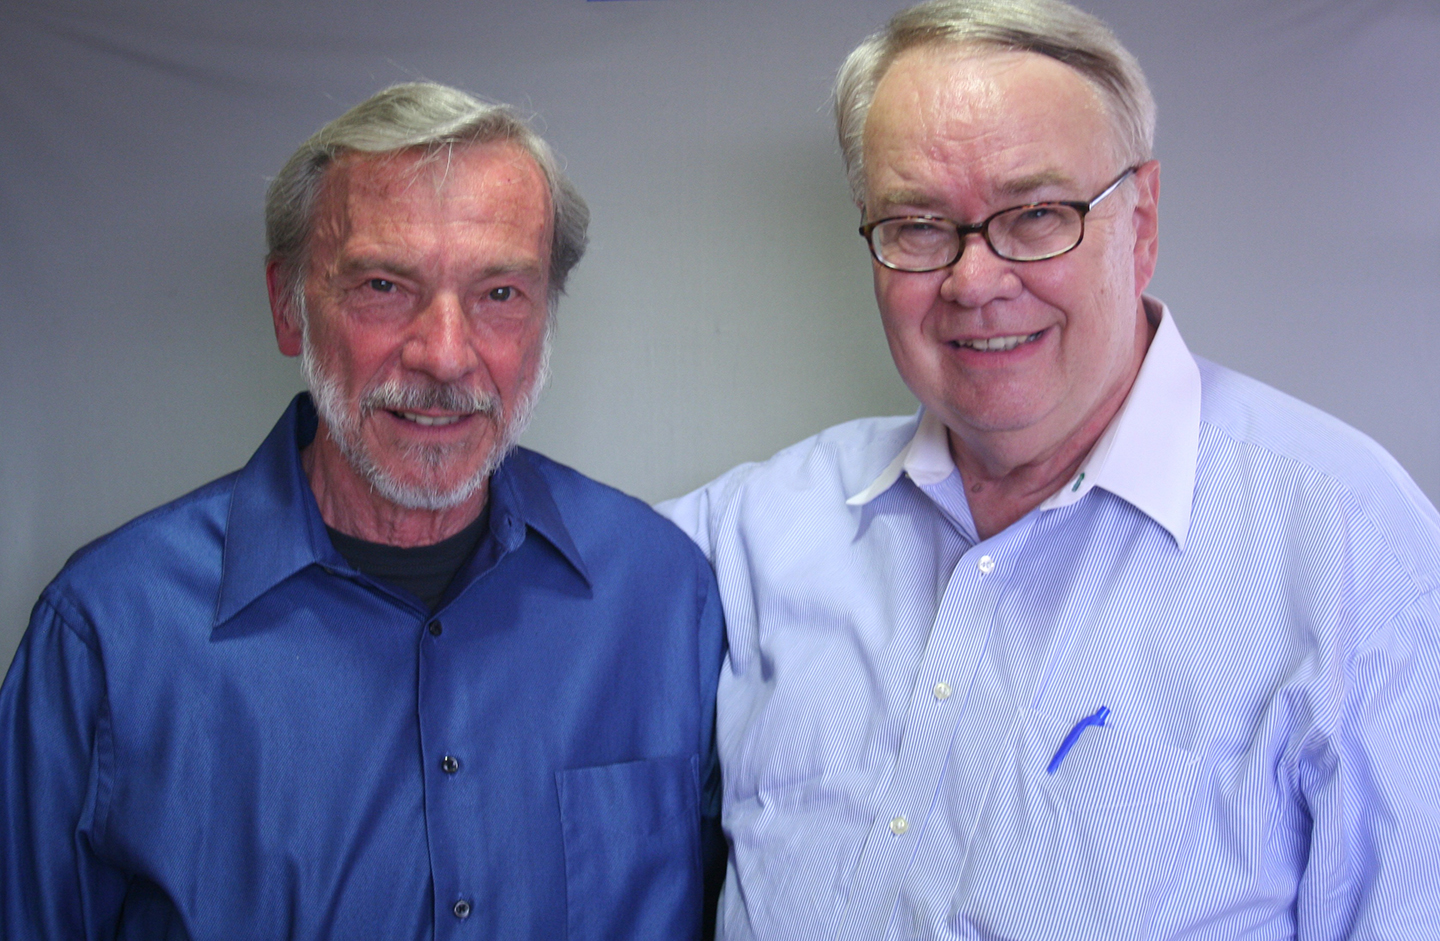 StoryCorps: Alf & Roy